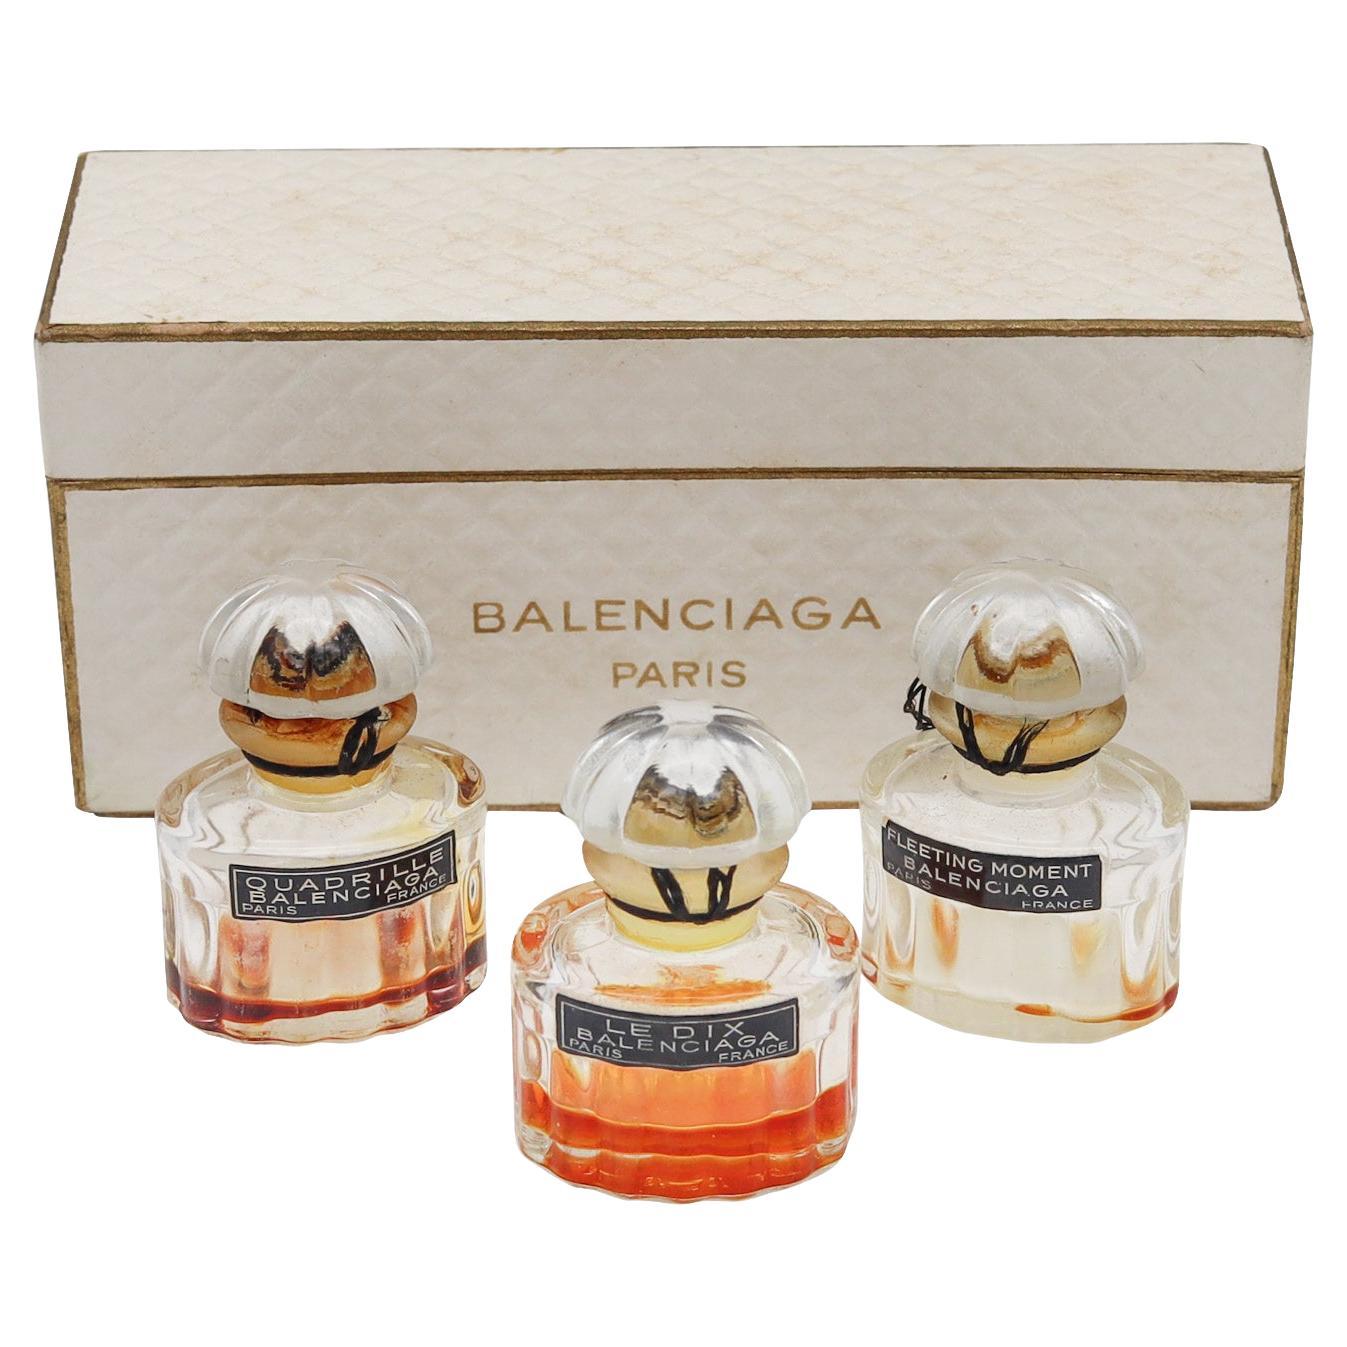 Balenciaga 1950 Paris Perfume Crystal Bottles Trio in Coffret Set Le Dix Fuites For Sale